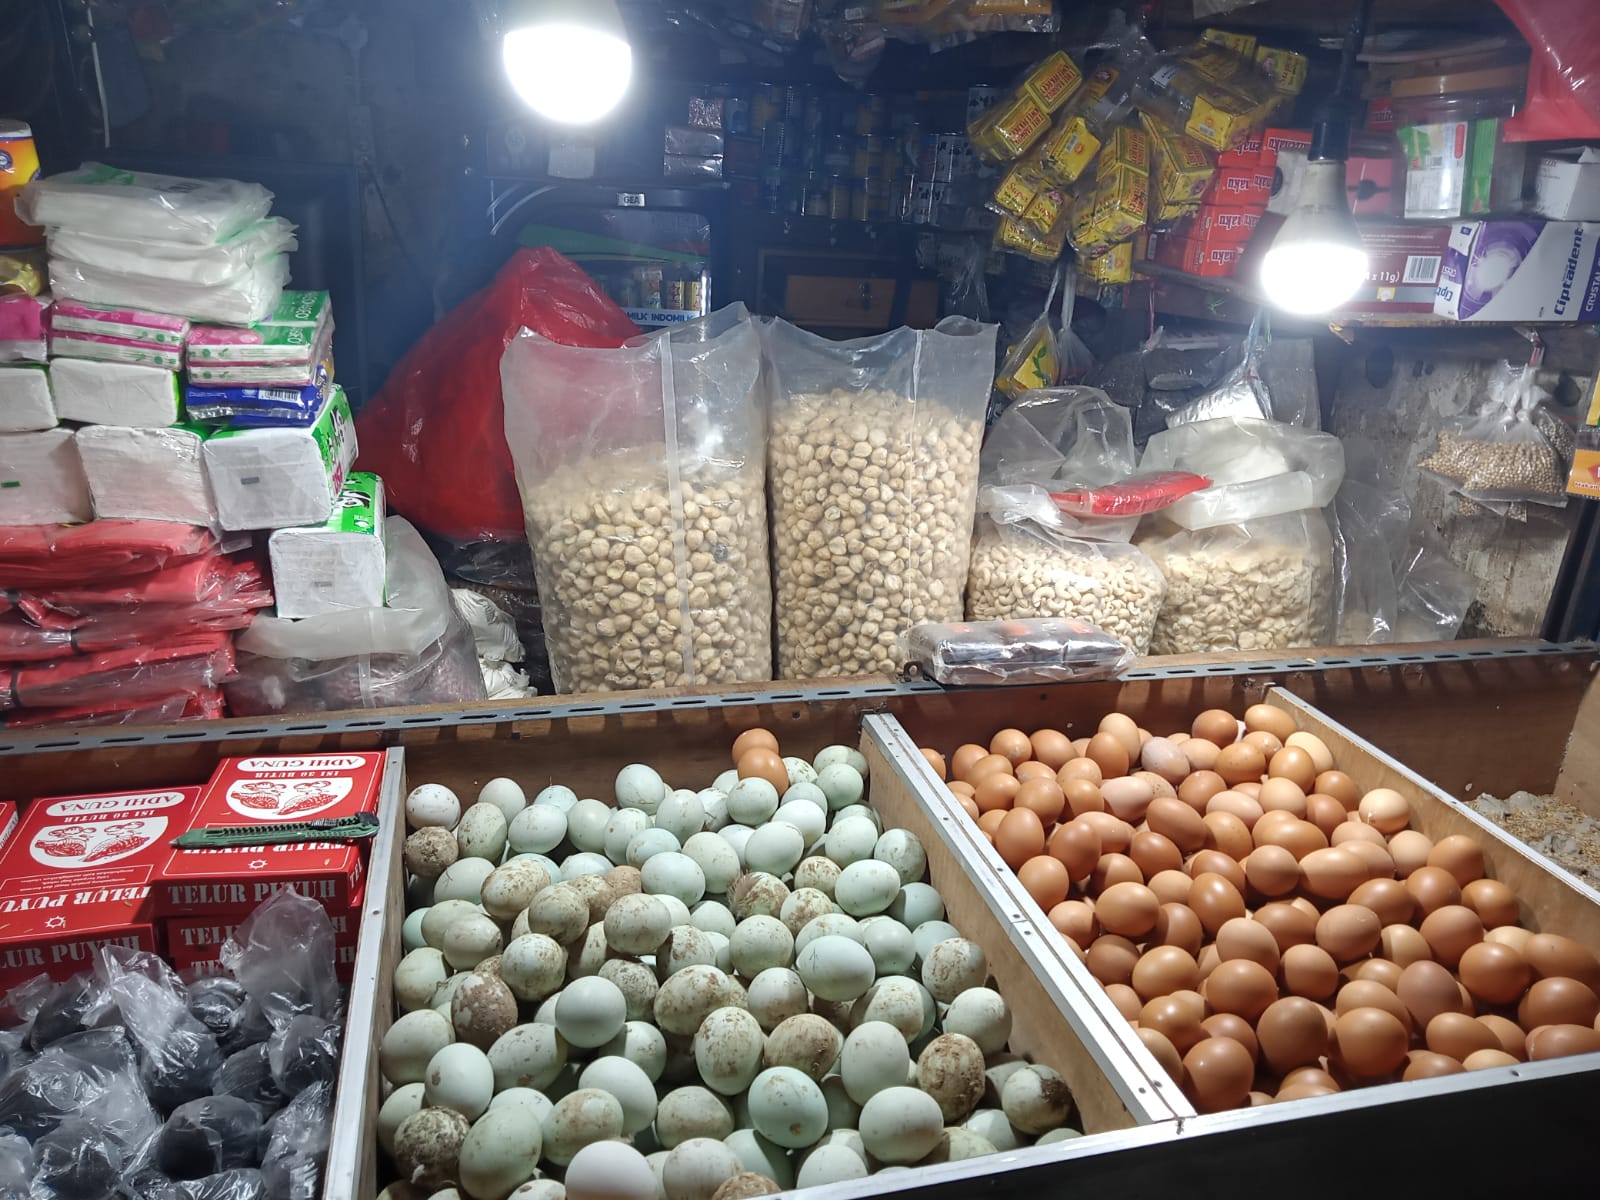 Jelang Ramadhan, Harga Bapok di Pasar Palmerah Mengalami Kenaikan